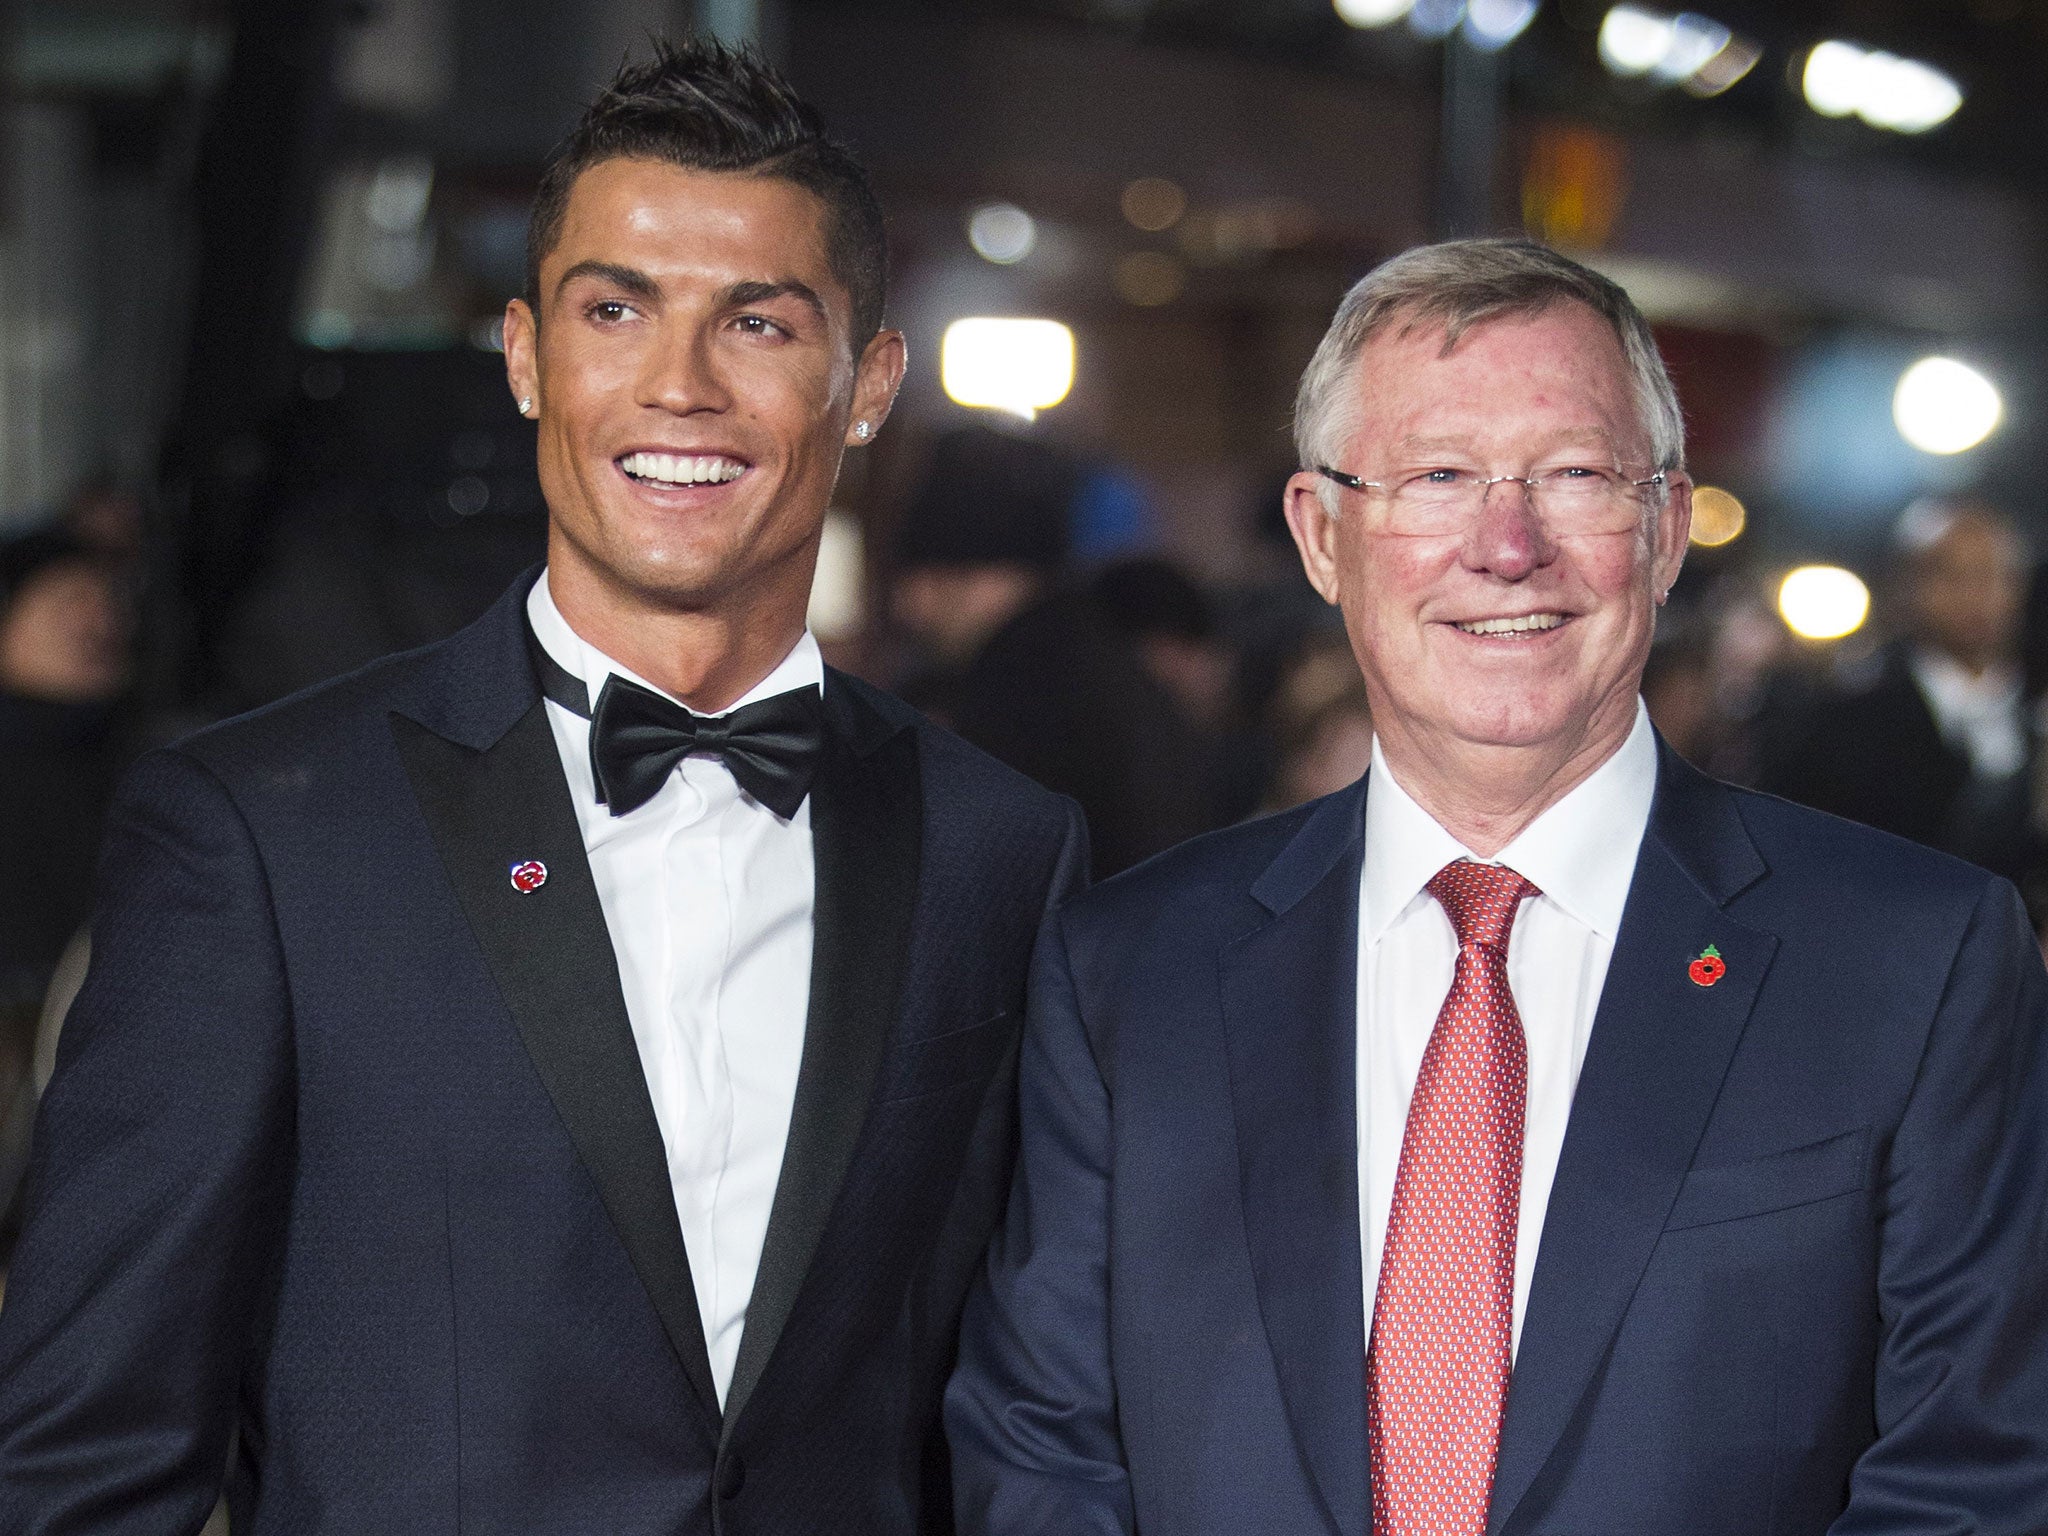 Cristiano Ronaldo an Sir Alex Ferguson ahead of the London premiere of the striker's new film